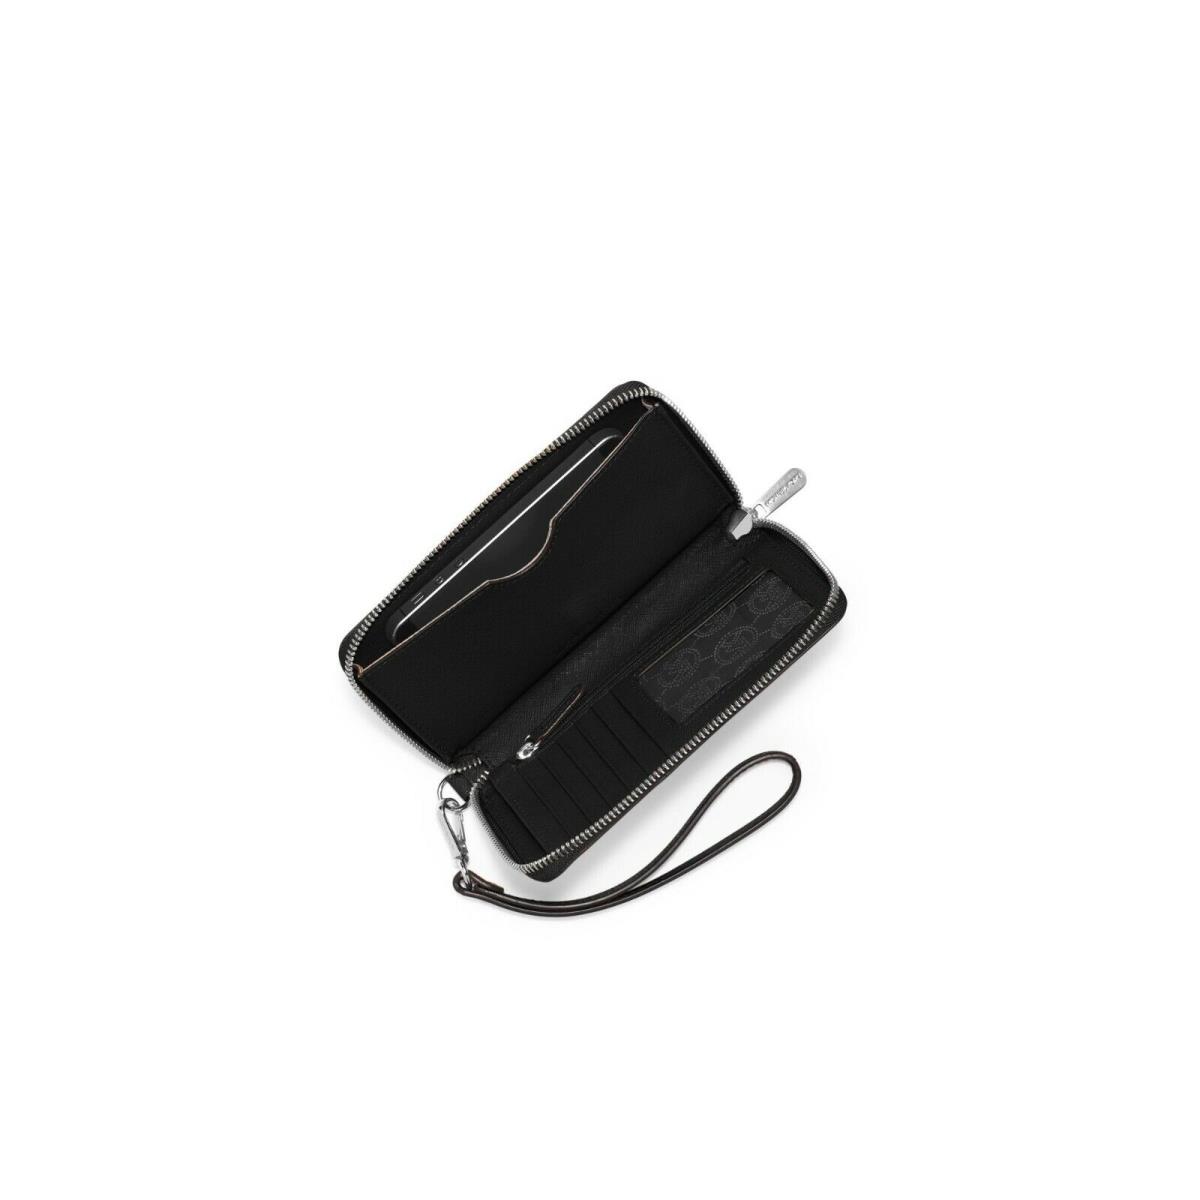 Michael Kors MK Jet Set Travel Large Flat MF Phone Case/wristlet-black - Exterior: Black, Hardware: Silver